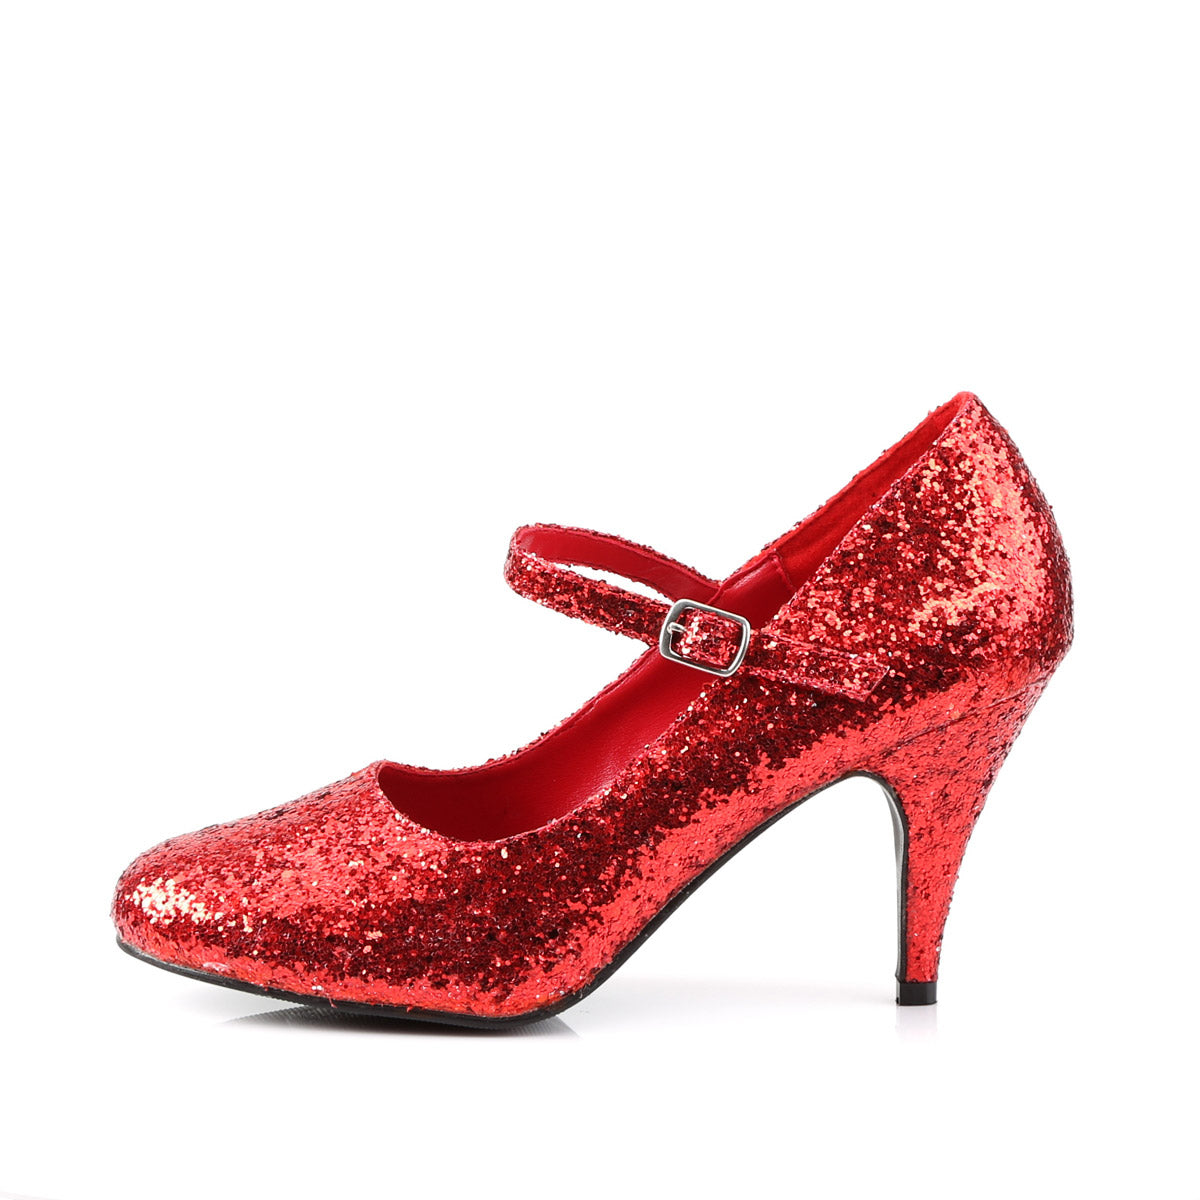 Sexy Glitter All Over Mary Jane Round Toe Pumps High Heels Shoes Pleaser Funtasma GLINDA/50G